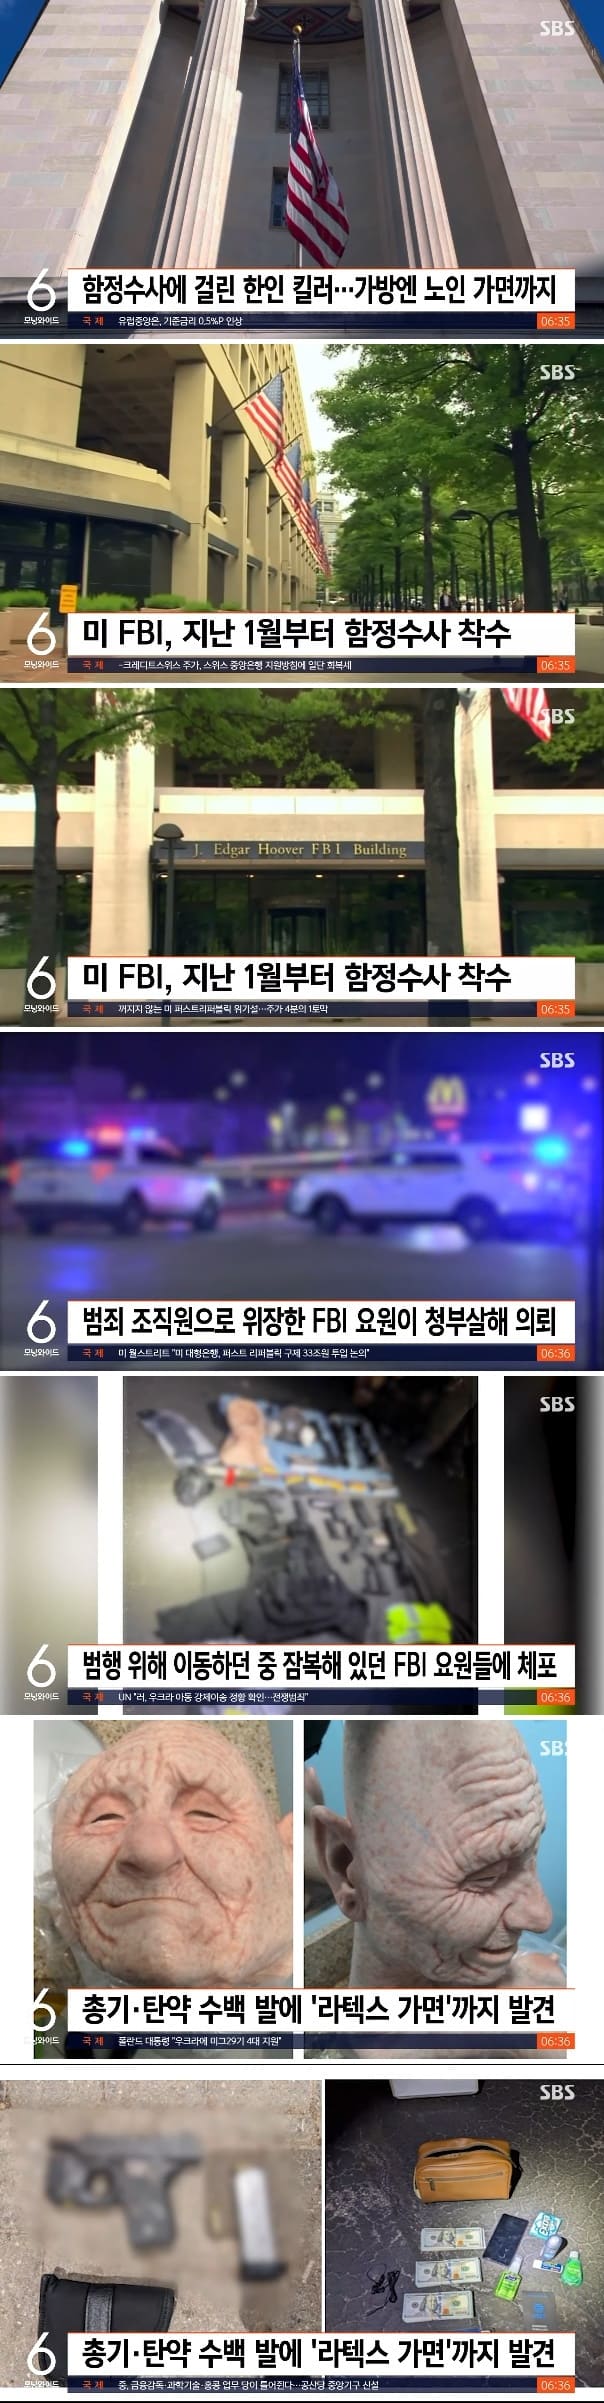 FBI가 체포한 한인 킬러.jpg FBI의 함정수사에 걸린 한국계 킬러